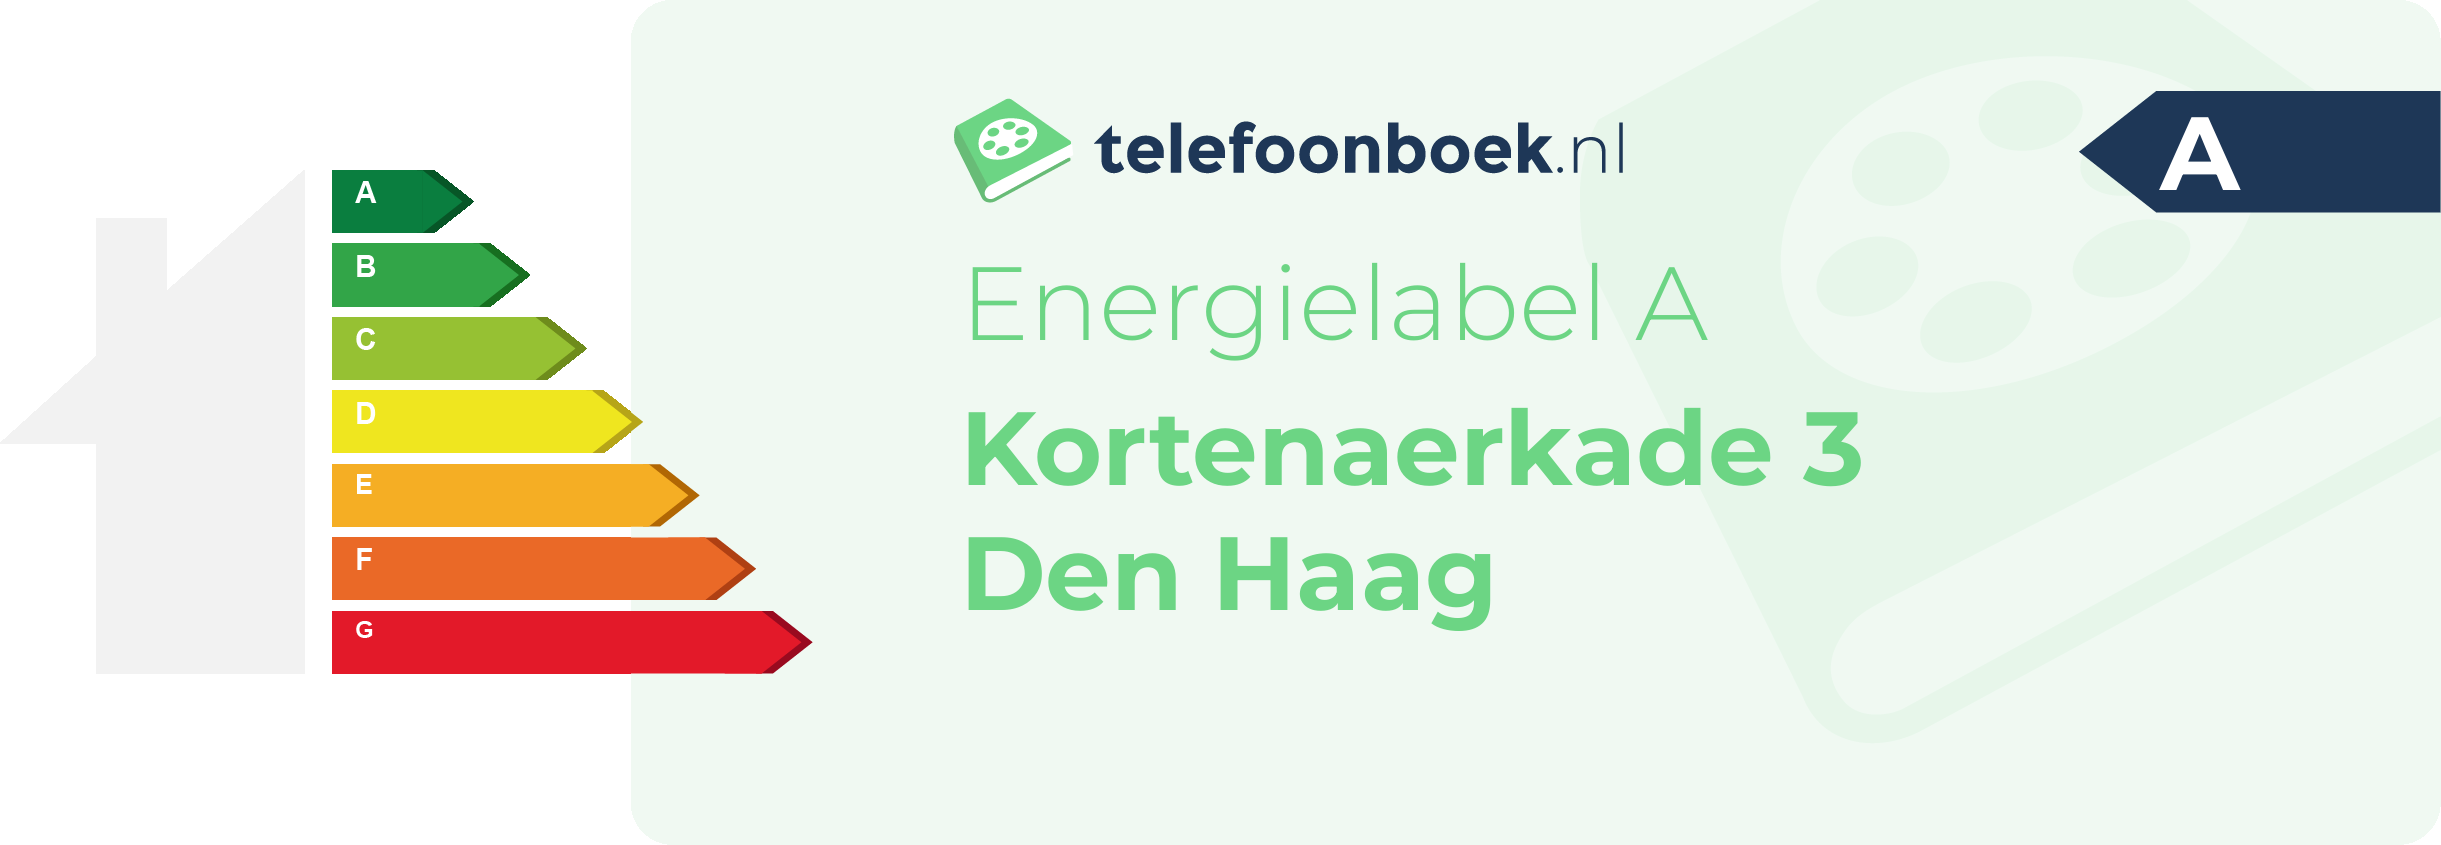 Energielabel Kortenaerkade 3 Den Haag